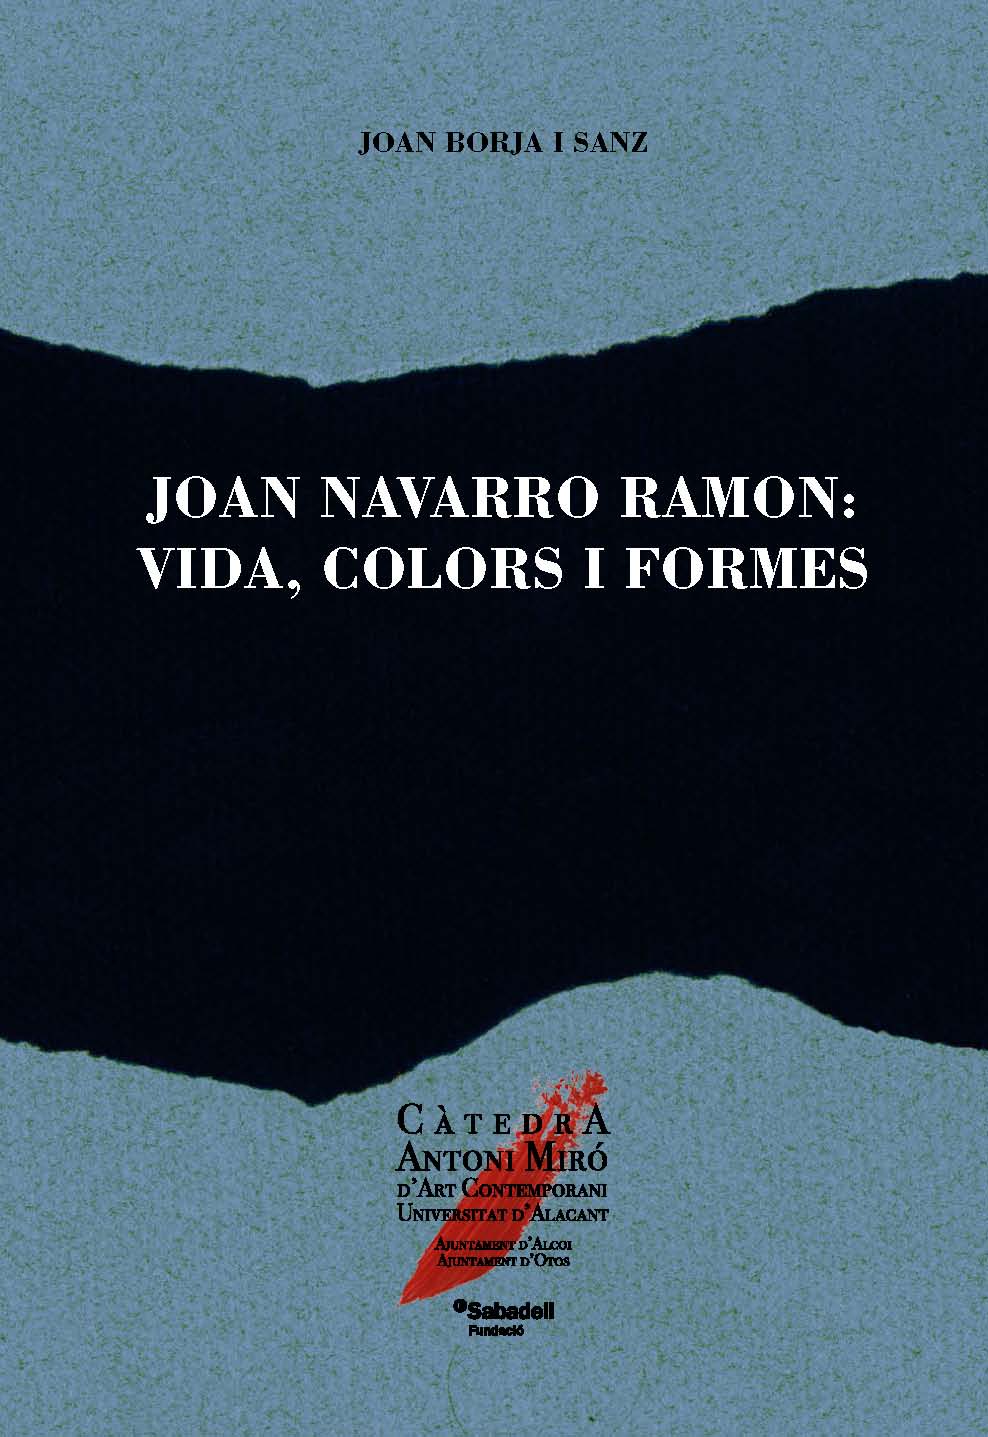 Joan Navarro Ramon: vida, colors i formes